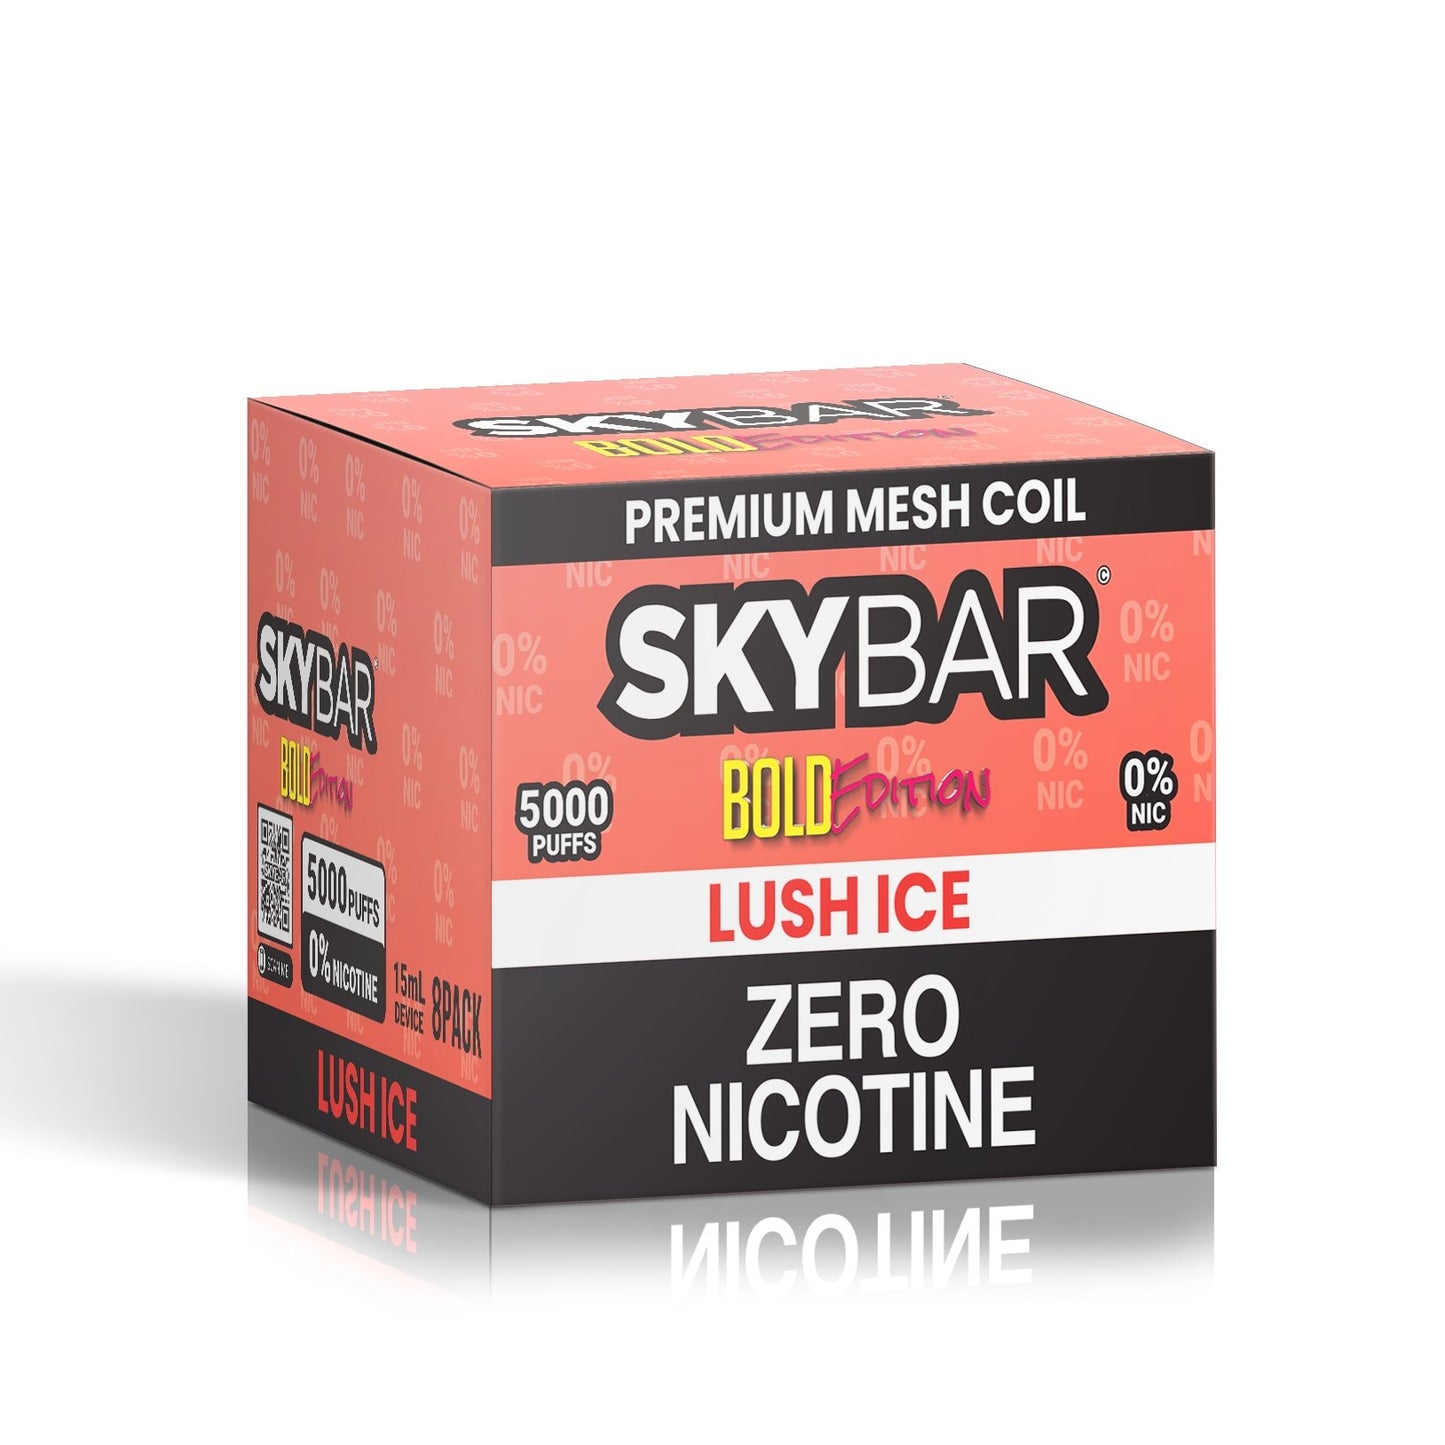 SKYBAR BOLD 5000 PUFFS 0% Nic ( 8ct BOX wholesale) - Skybar